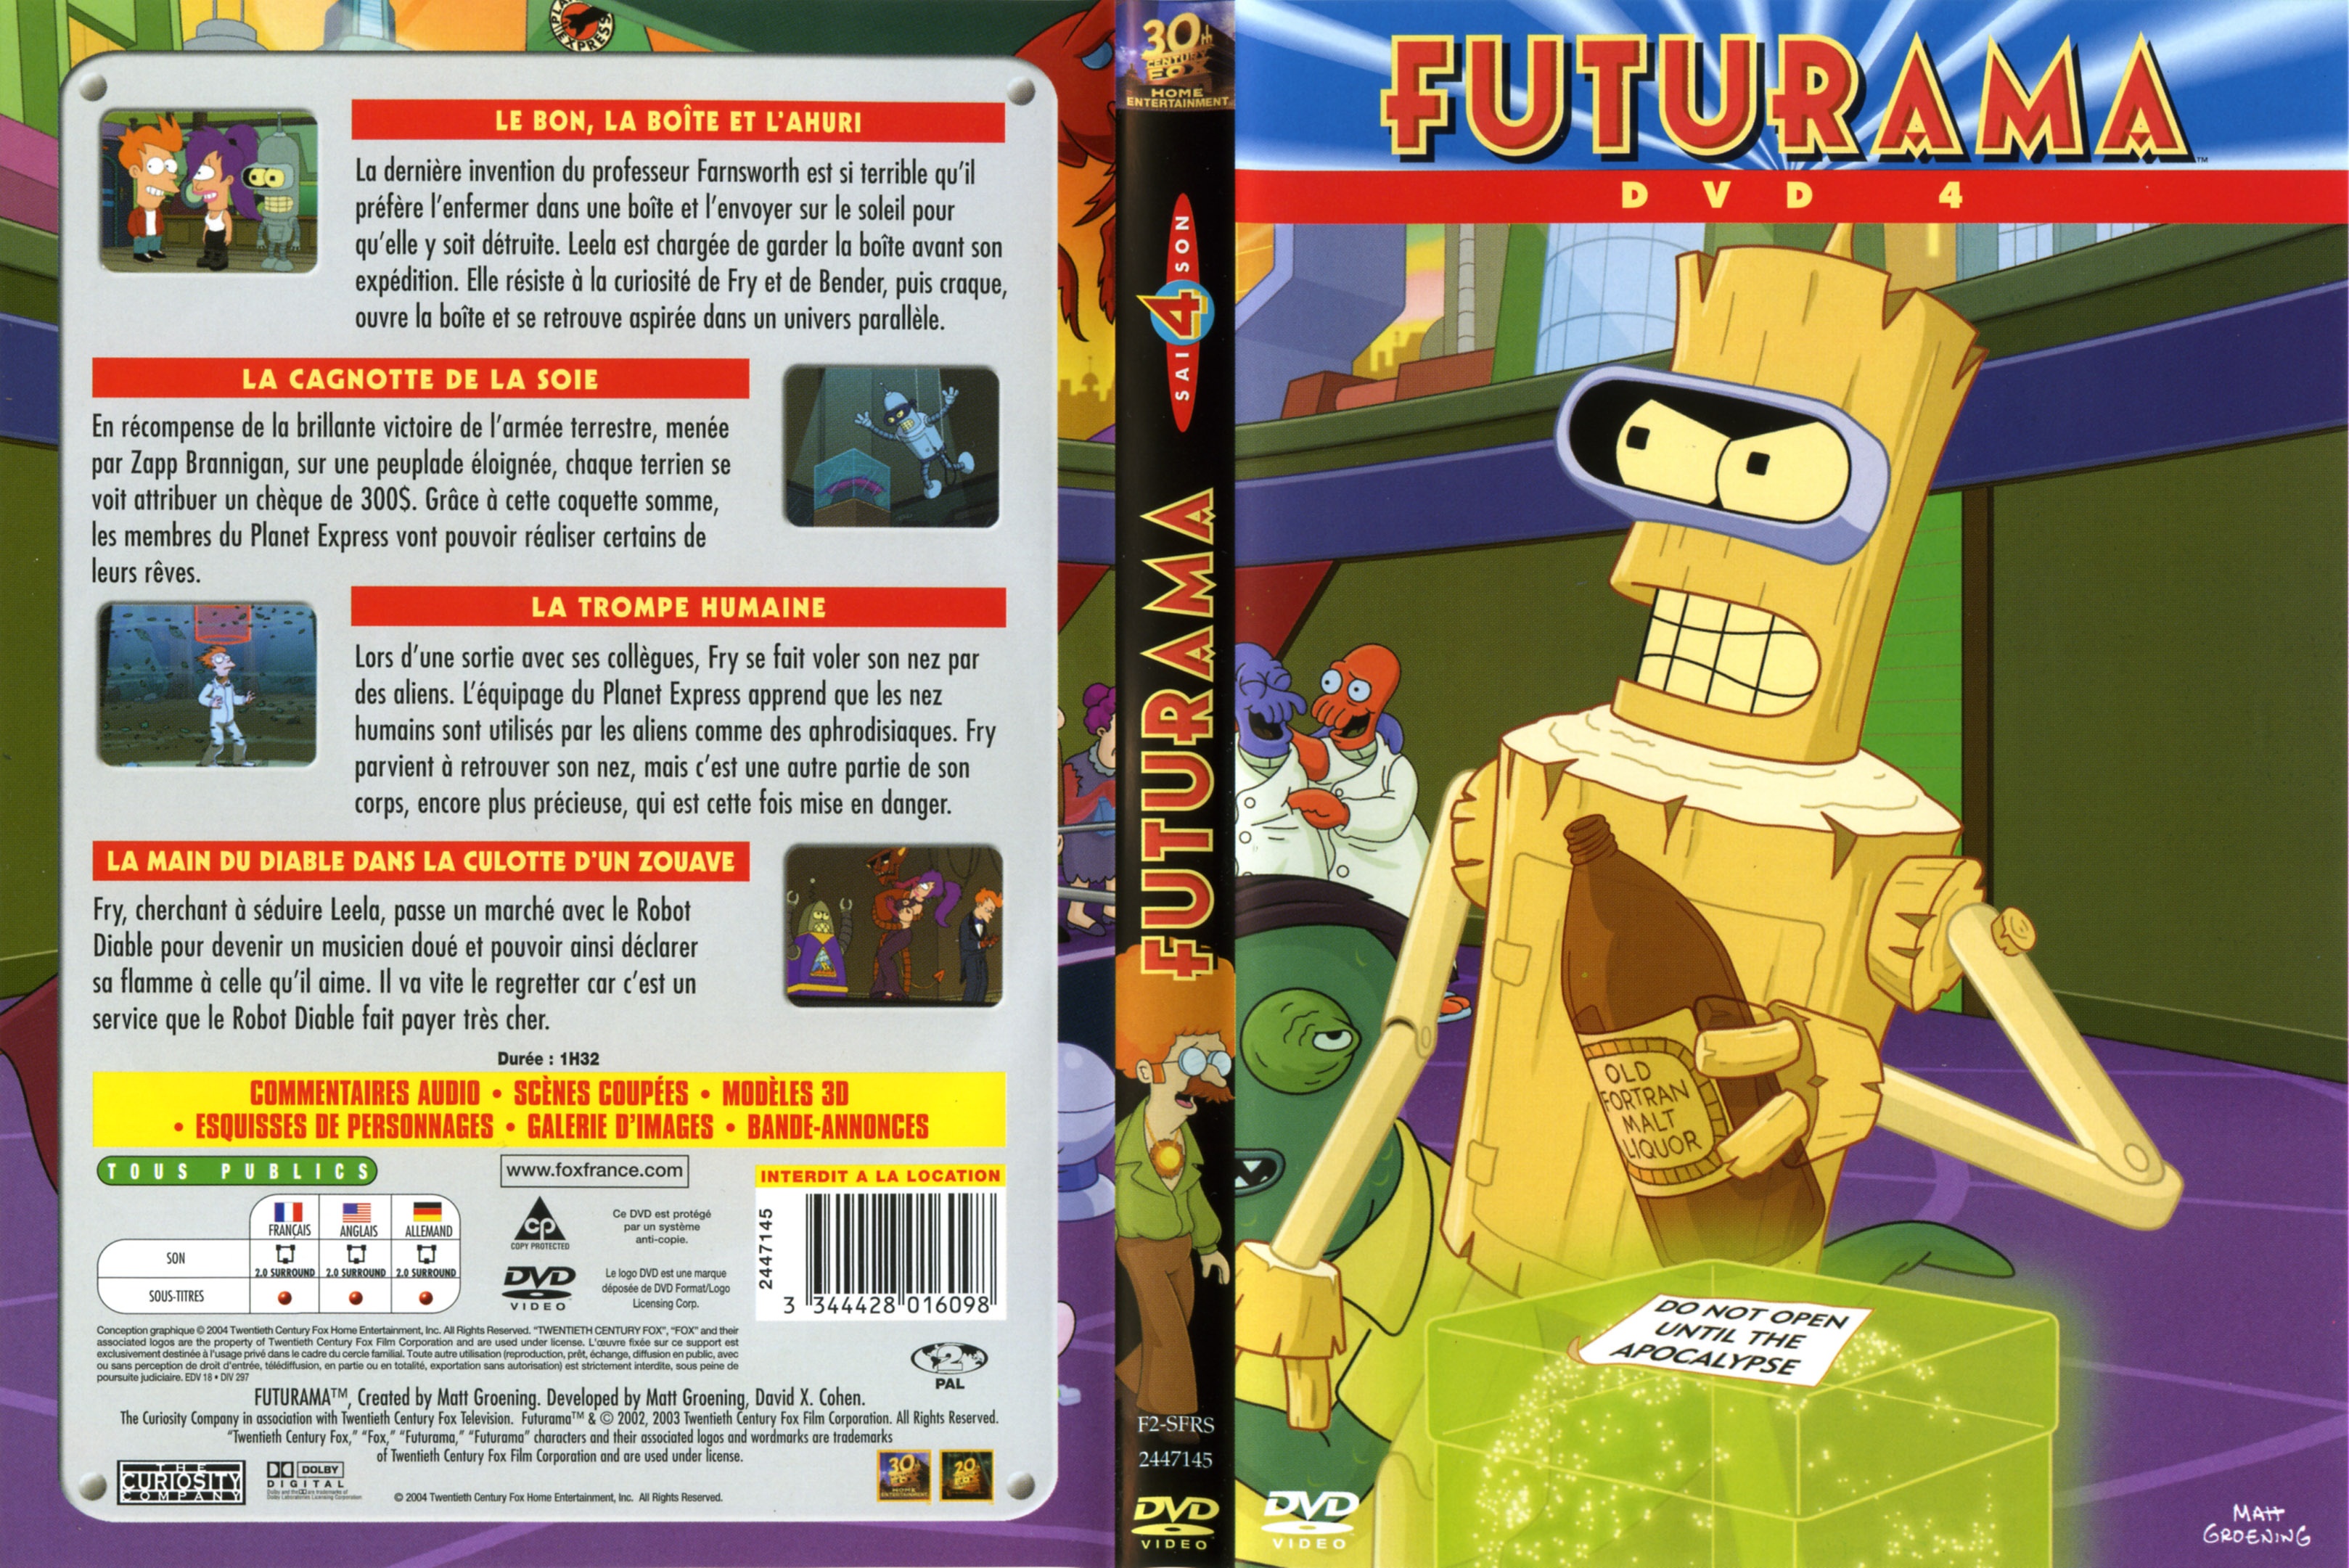 Jaquette DVD Futurama saison 4 DVD 4